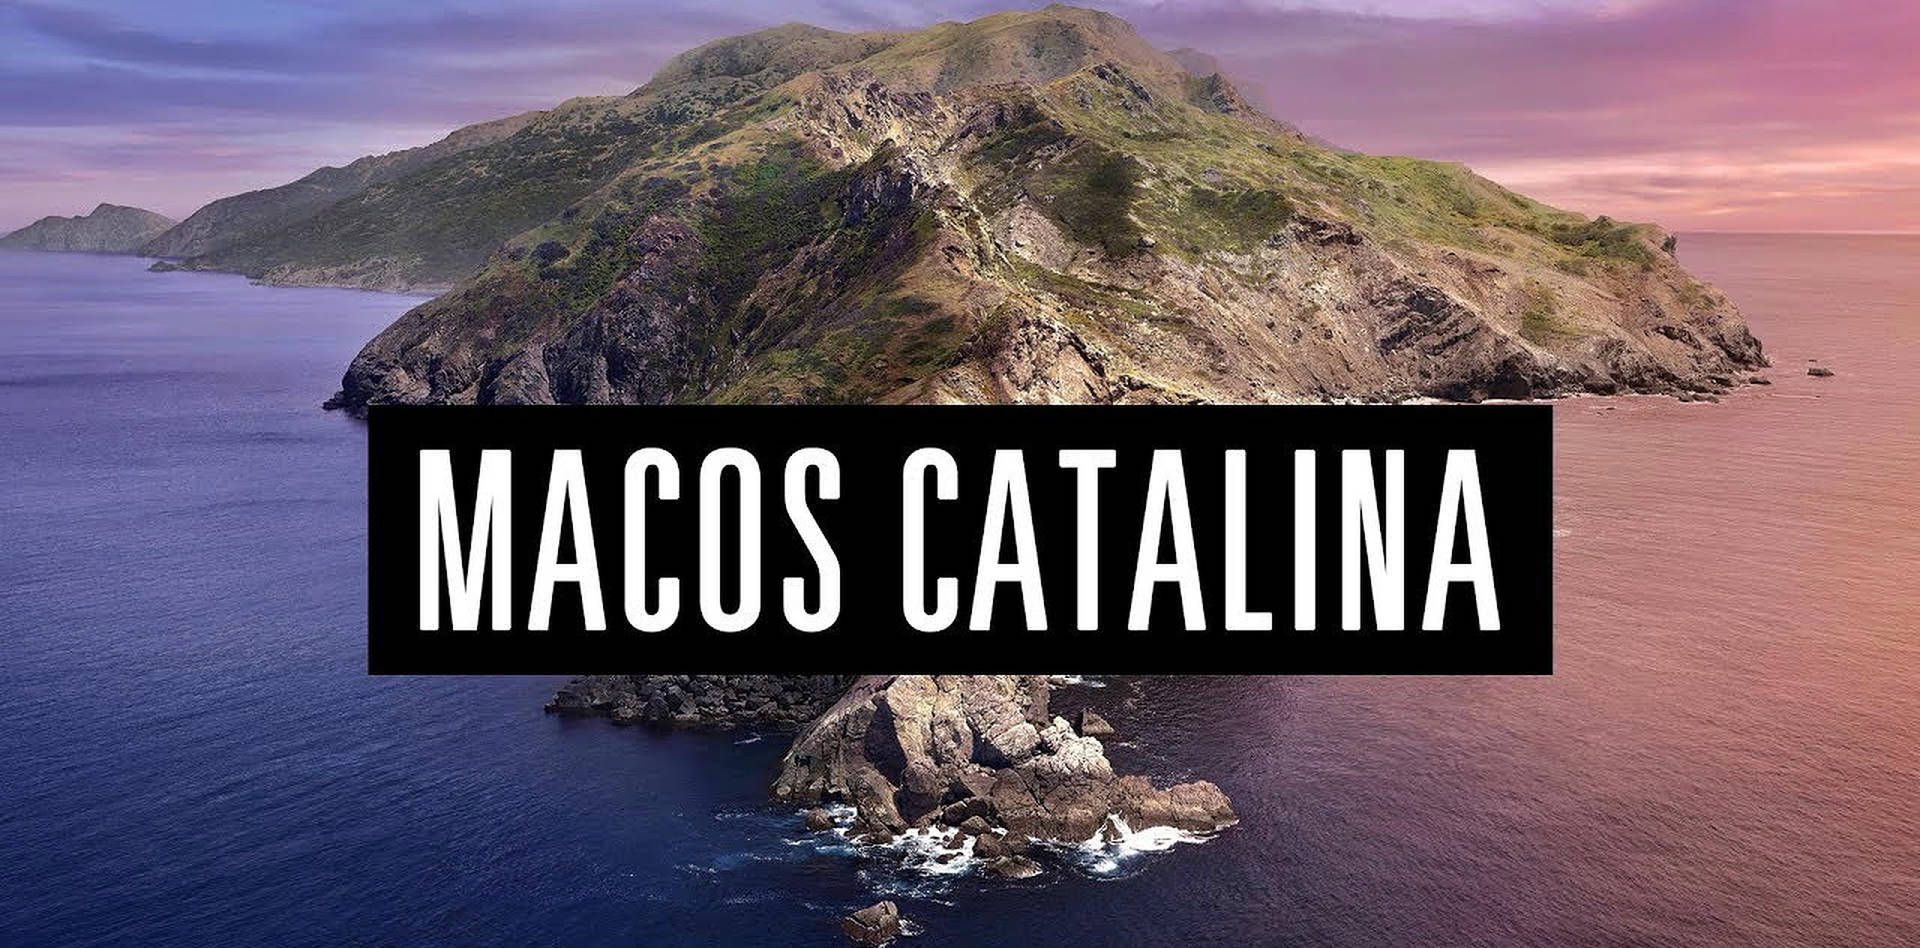 Captivating Landscape Of Macos Catalina